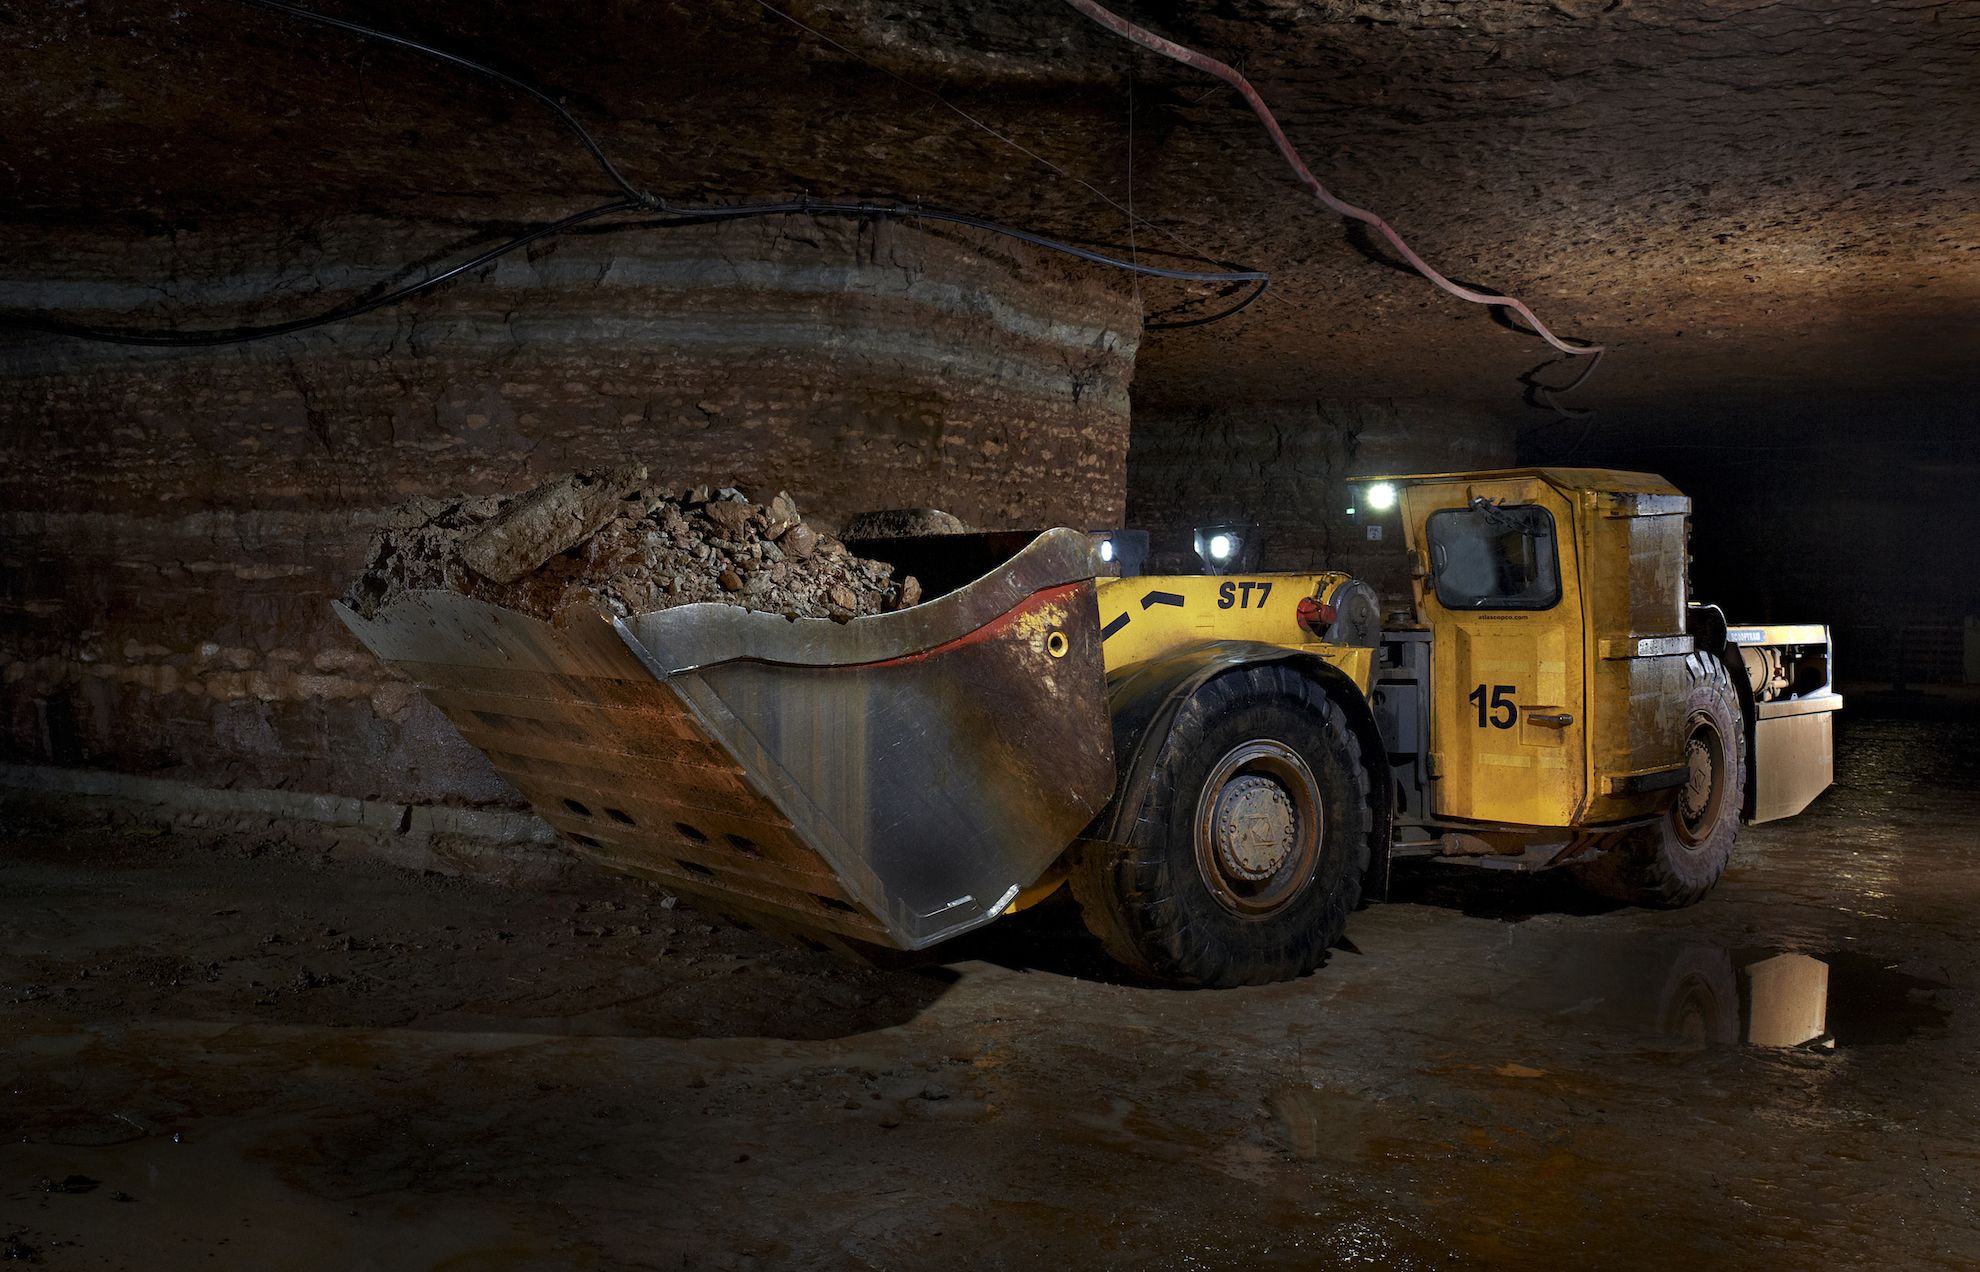 Underground Mining Methods